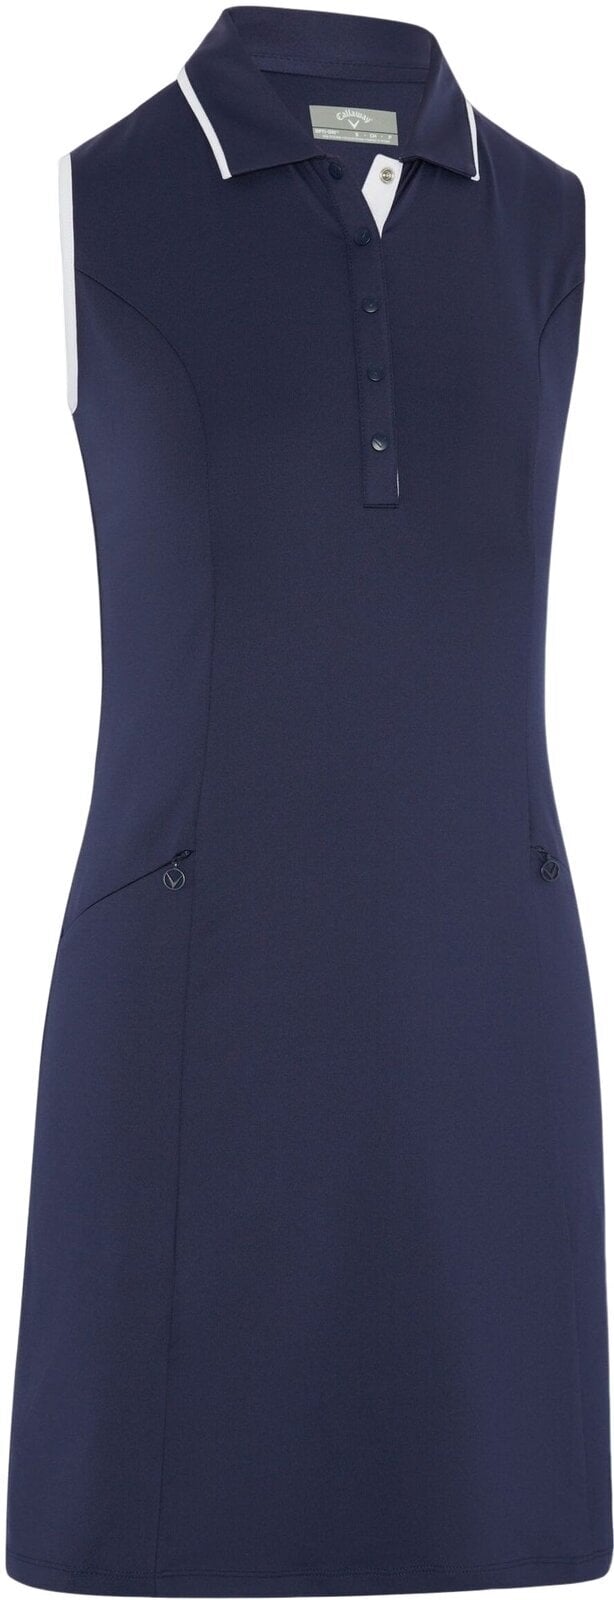 Skirt / Dress Callaway Womens Sleeveless Dress With Snap Placket Peacoat XL